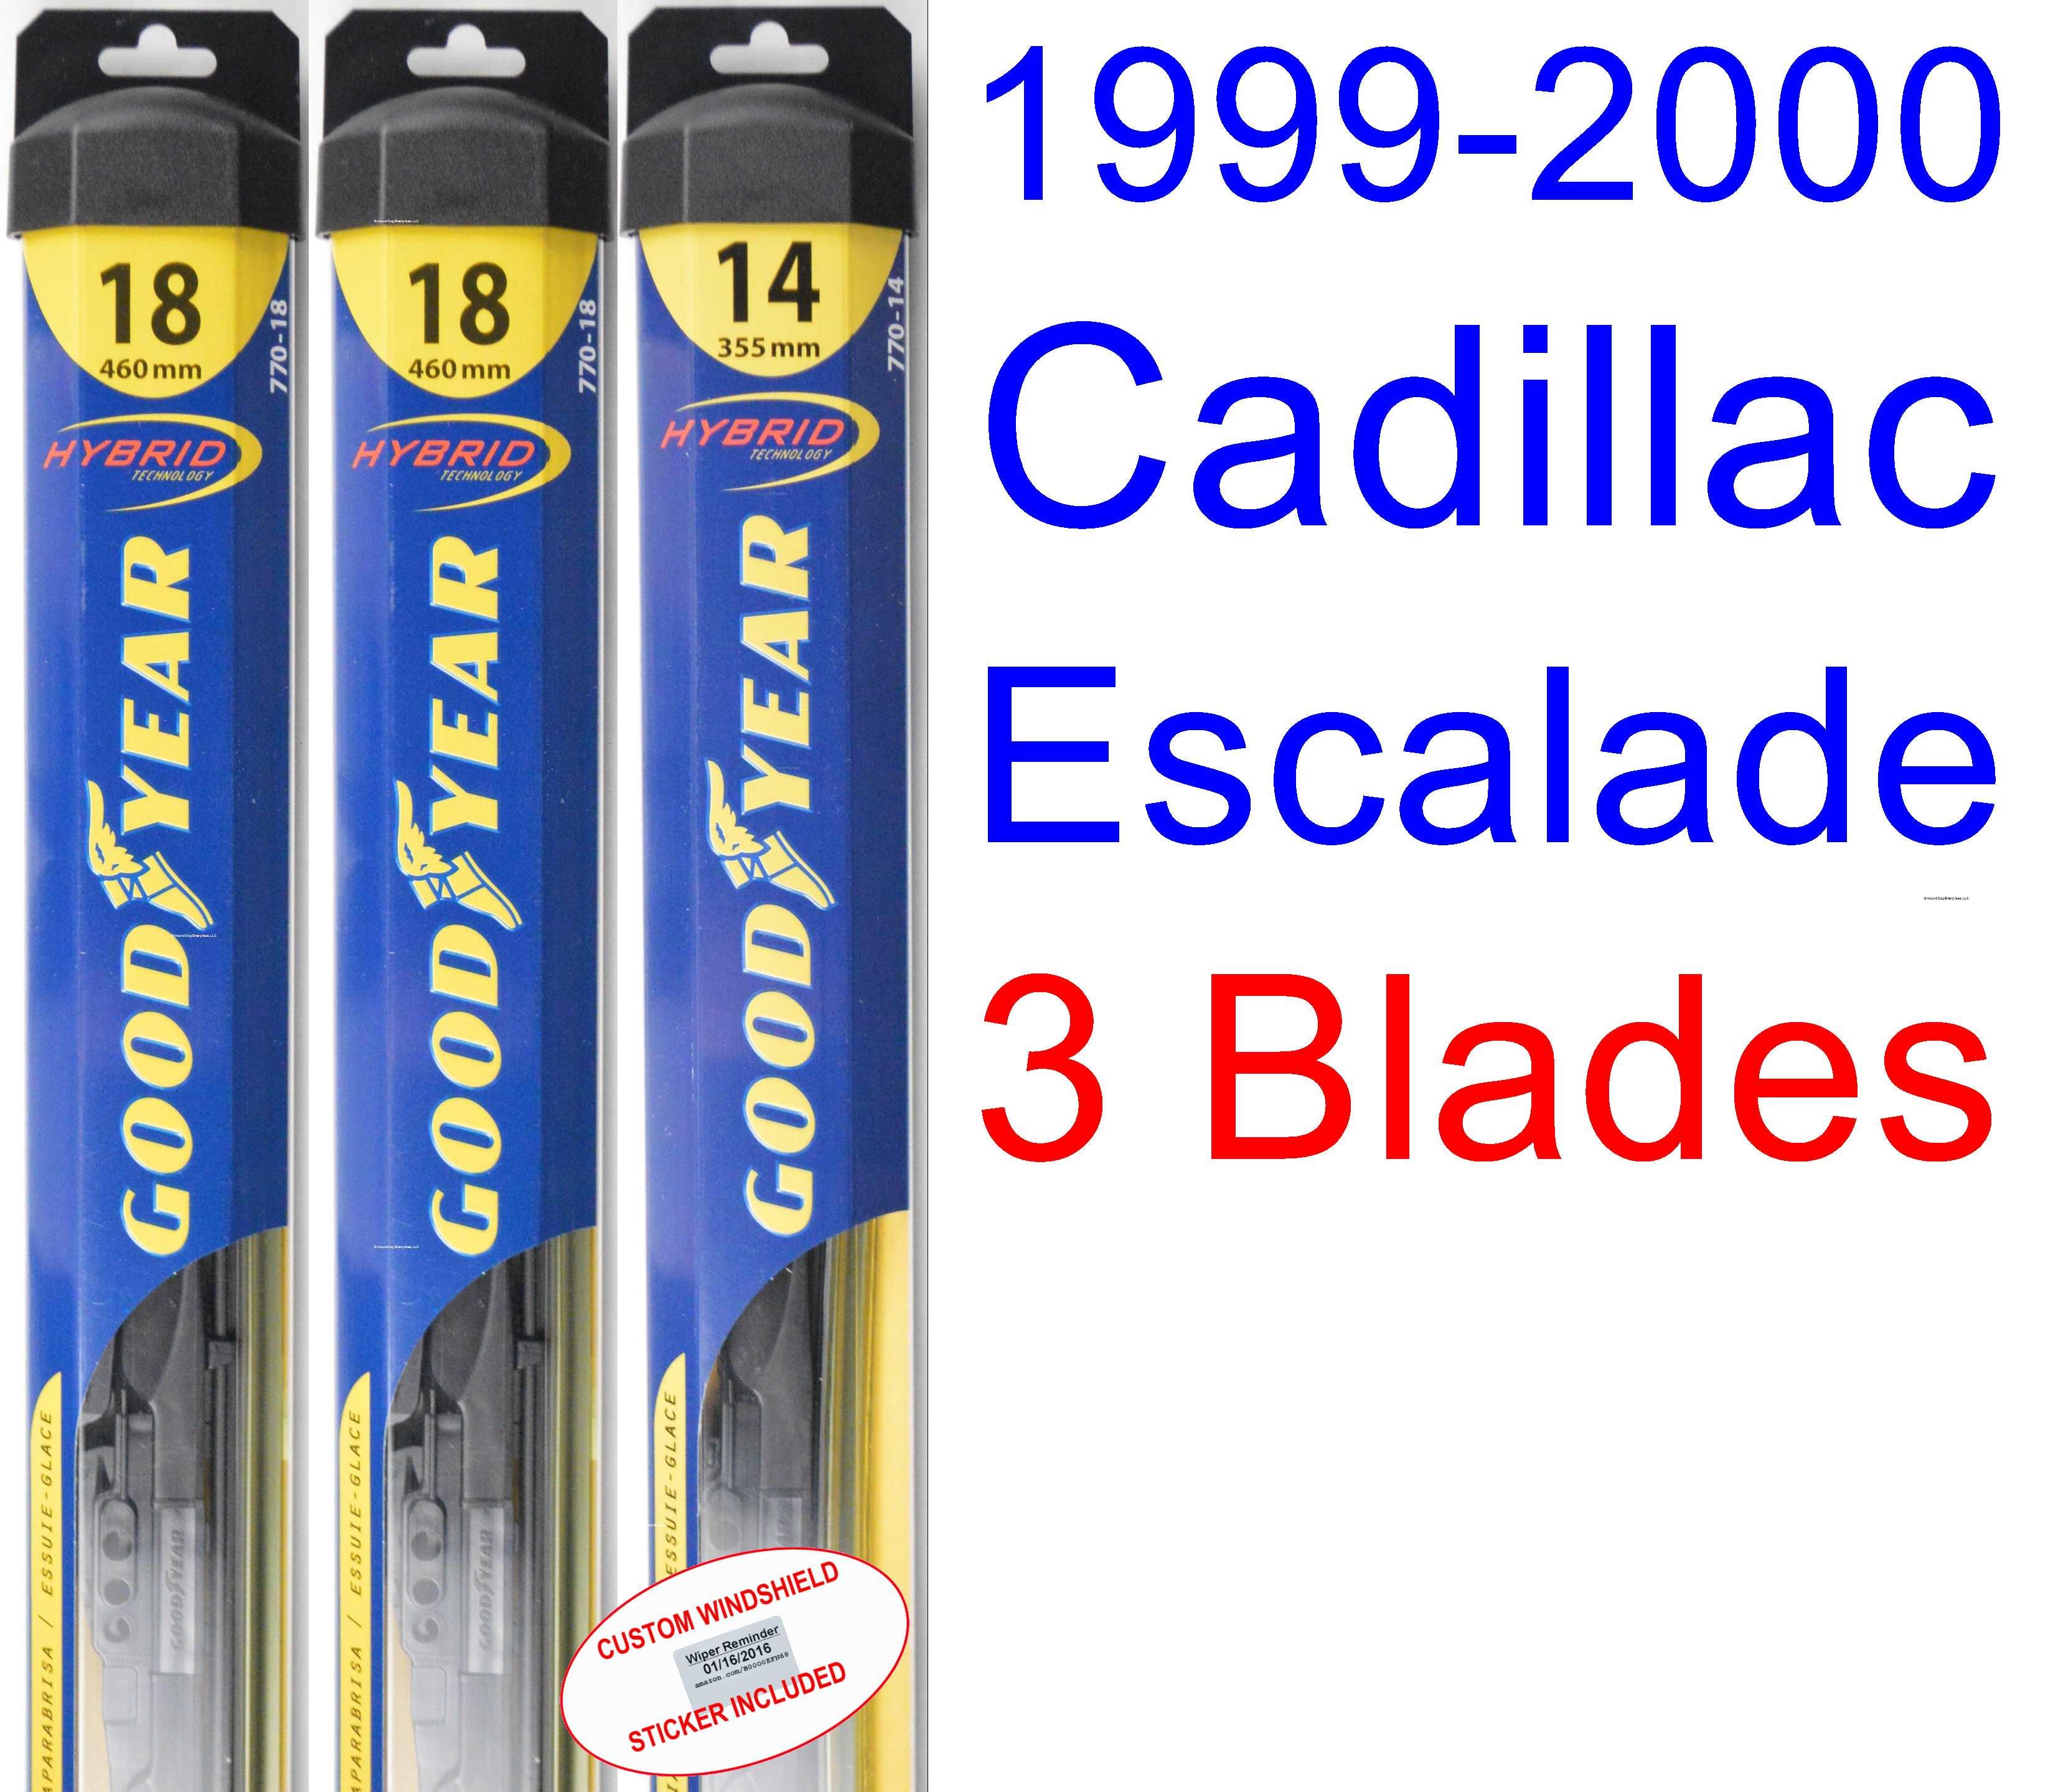 1999 2000 Cadillac Escalade Replacement Wiper Blade Set/Kit (Set of 3 Blades) (Goodyear Wiper Blades Hybrid)